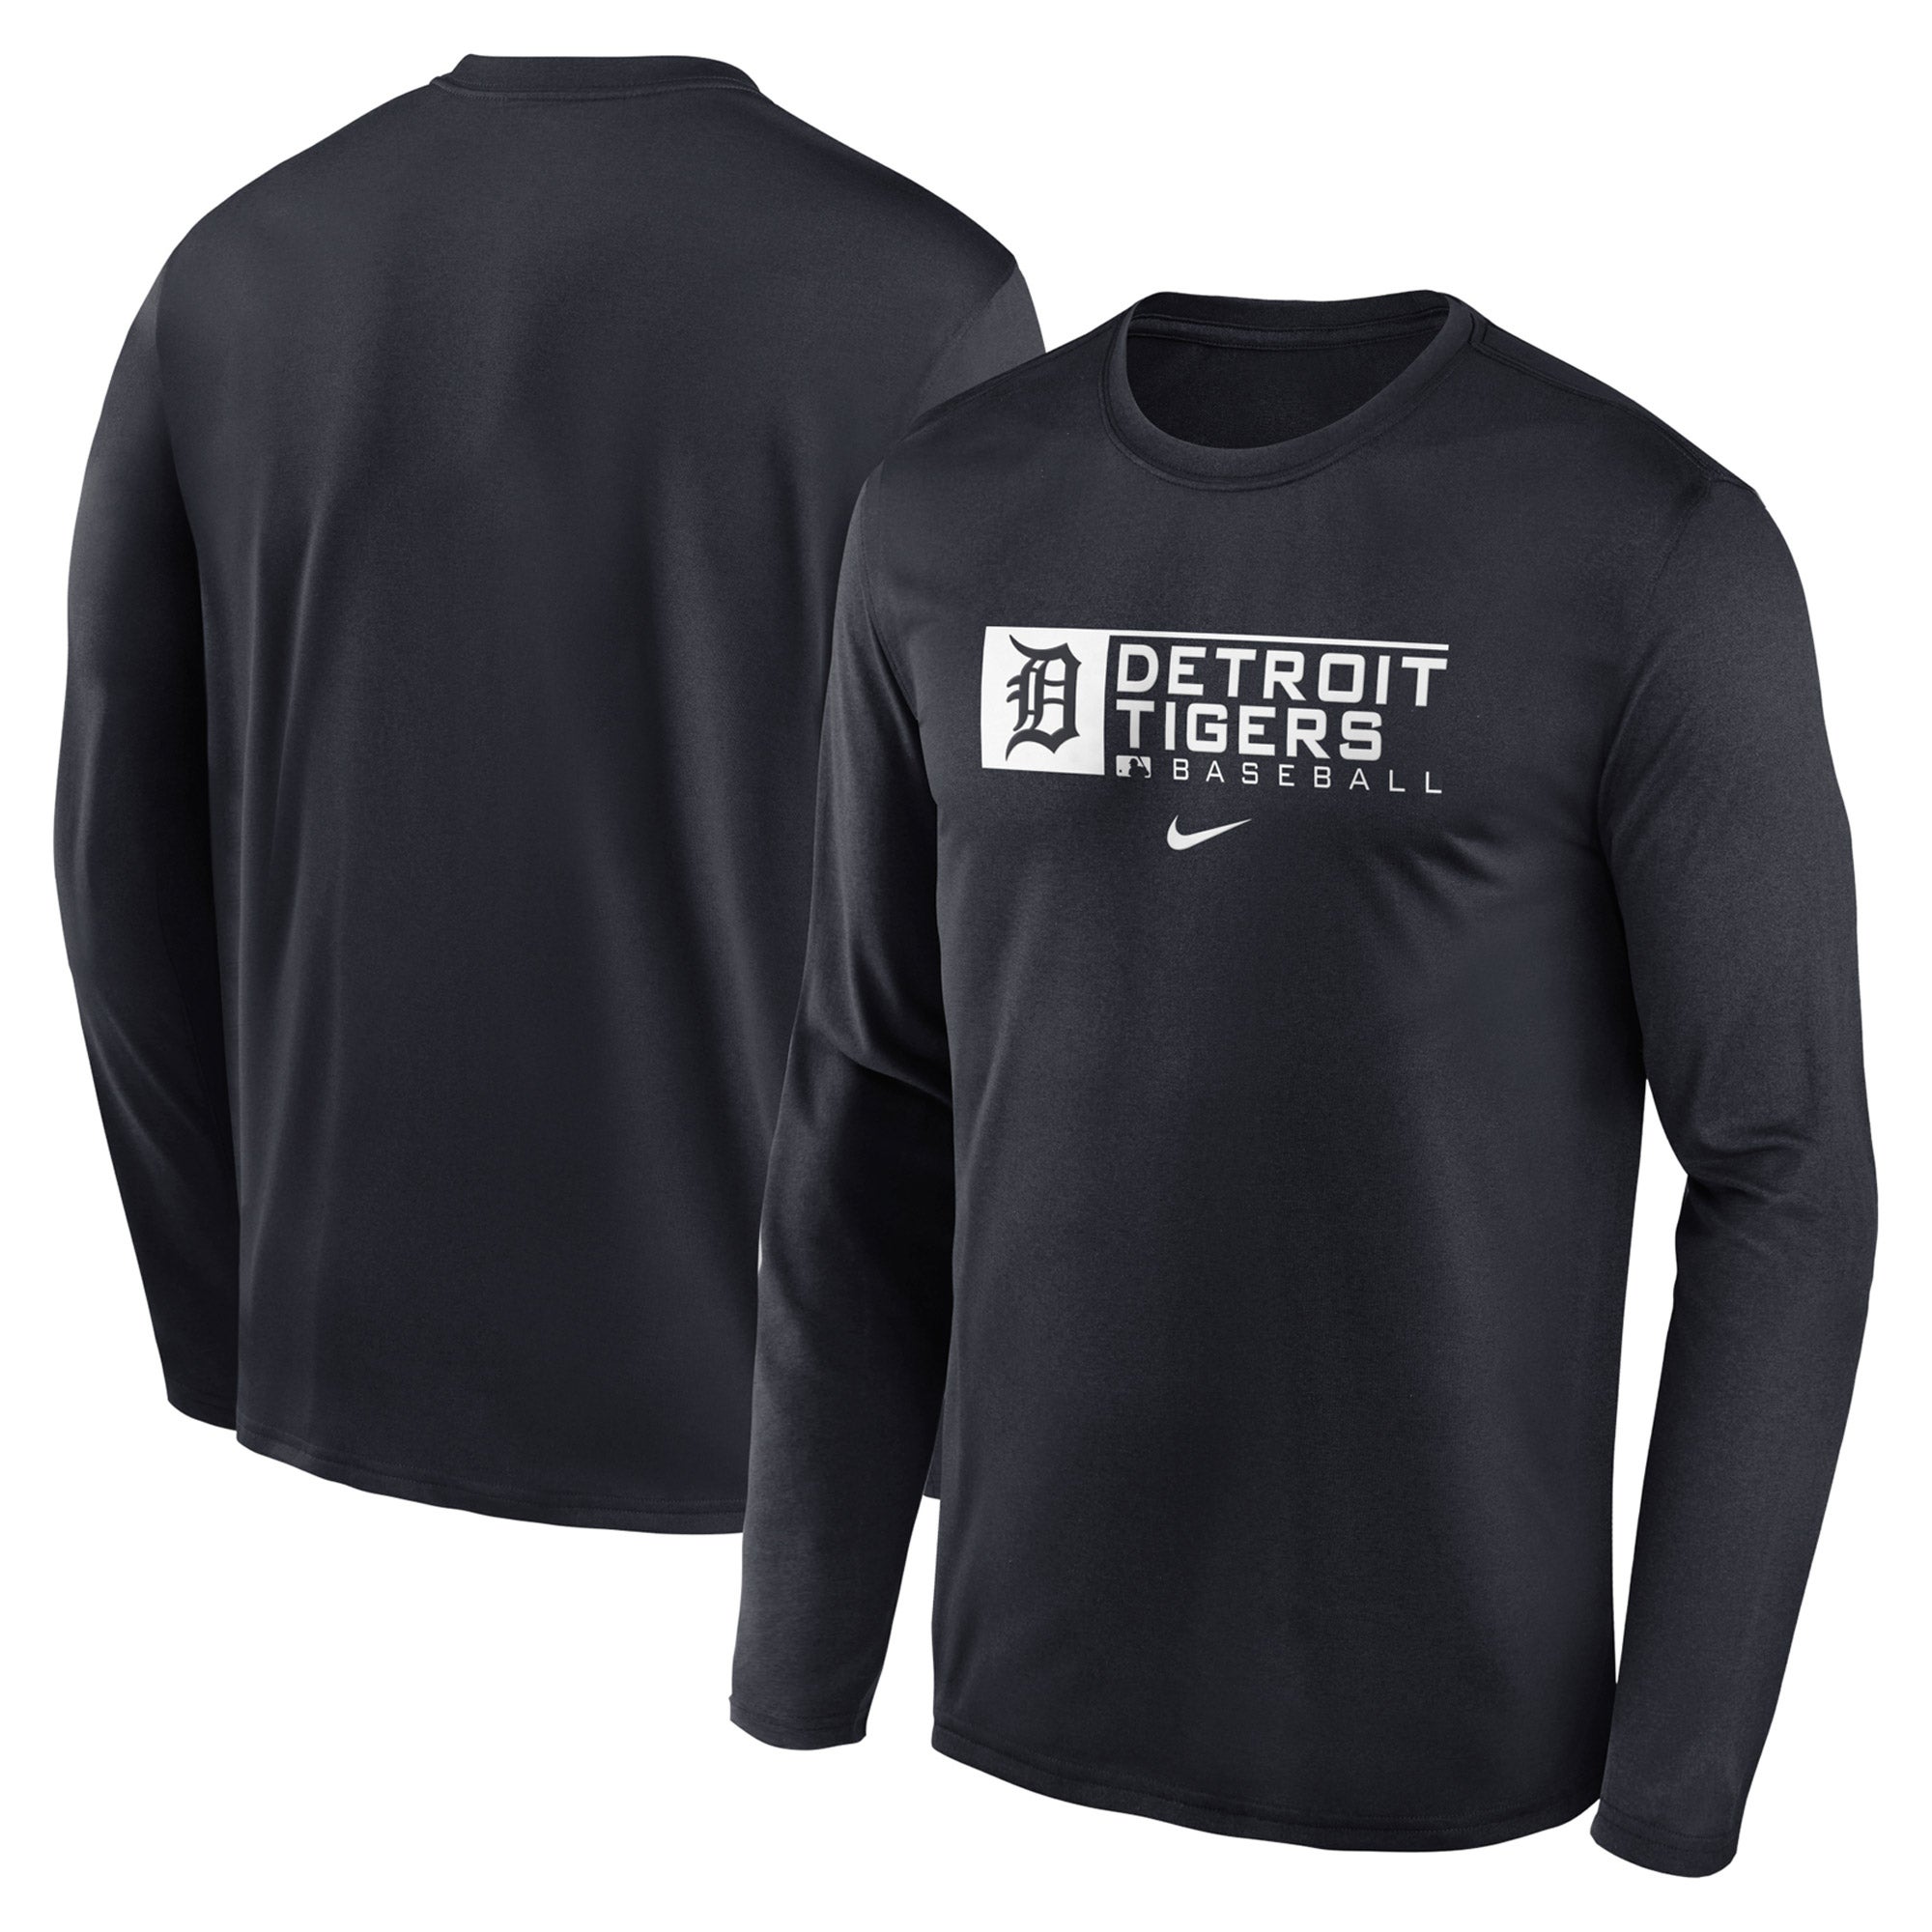 Men's Nike Navy New York Yankees Authentic Collection Logo Performance Long Sleeve T-Shirt Size: Medium